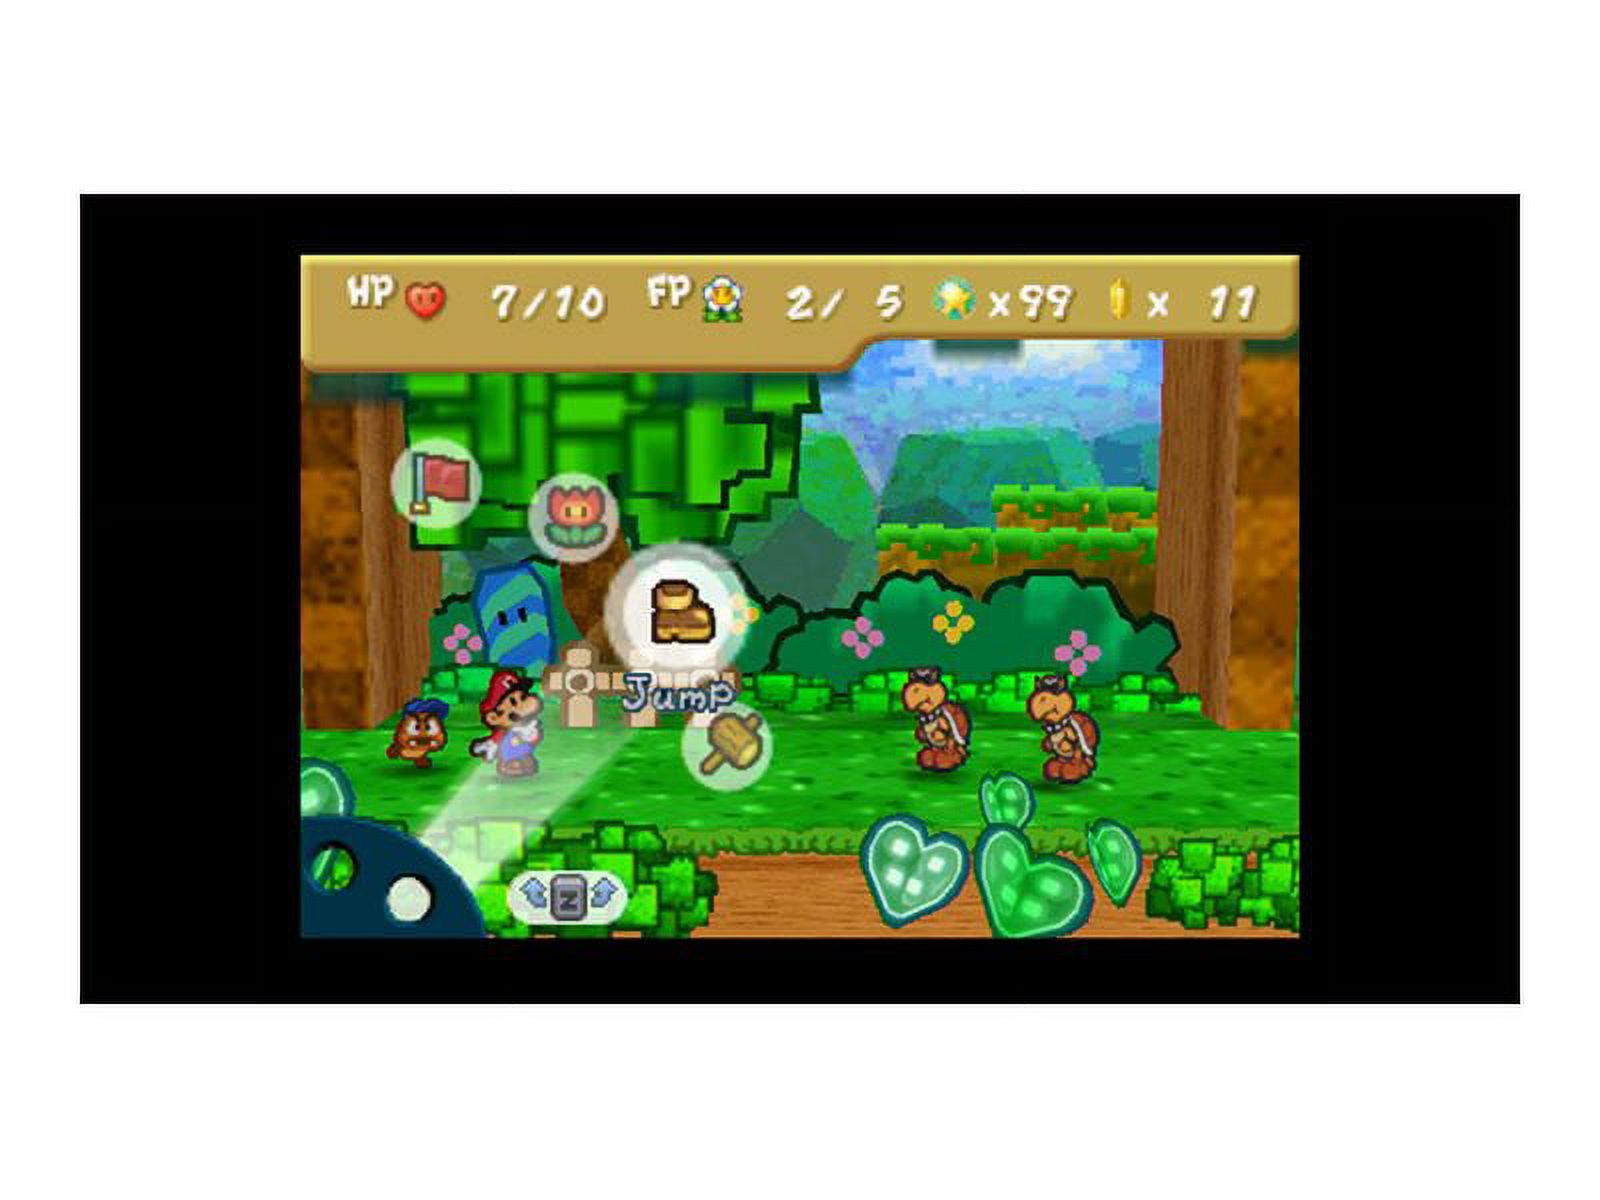 Paper Mario Sticker Star 3DS - image 2 of 7